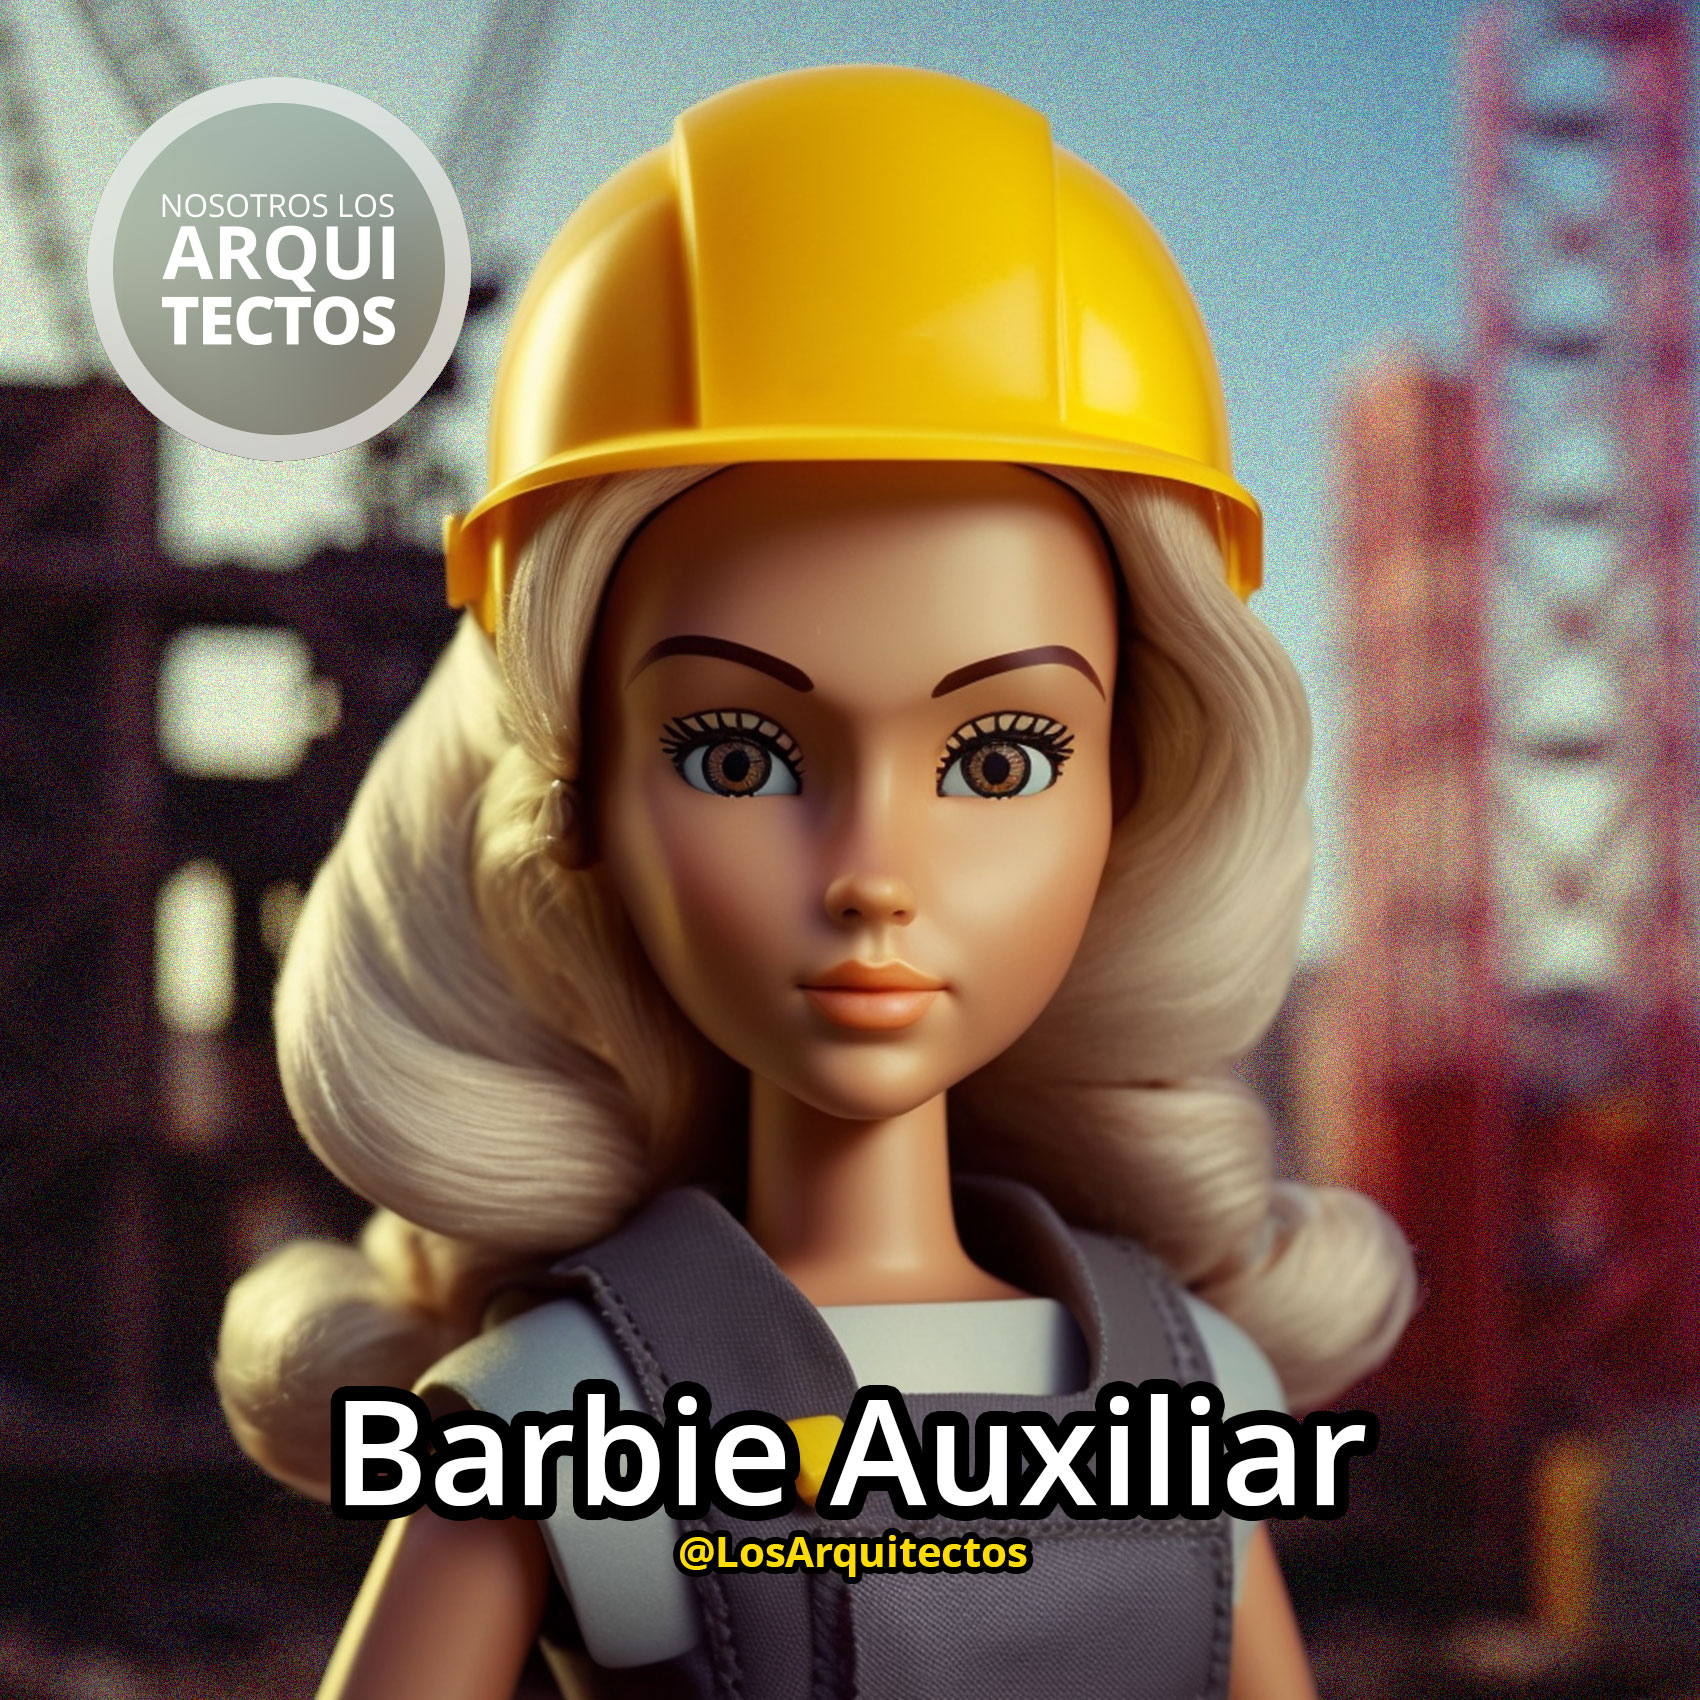 Barbie Auxiliar